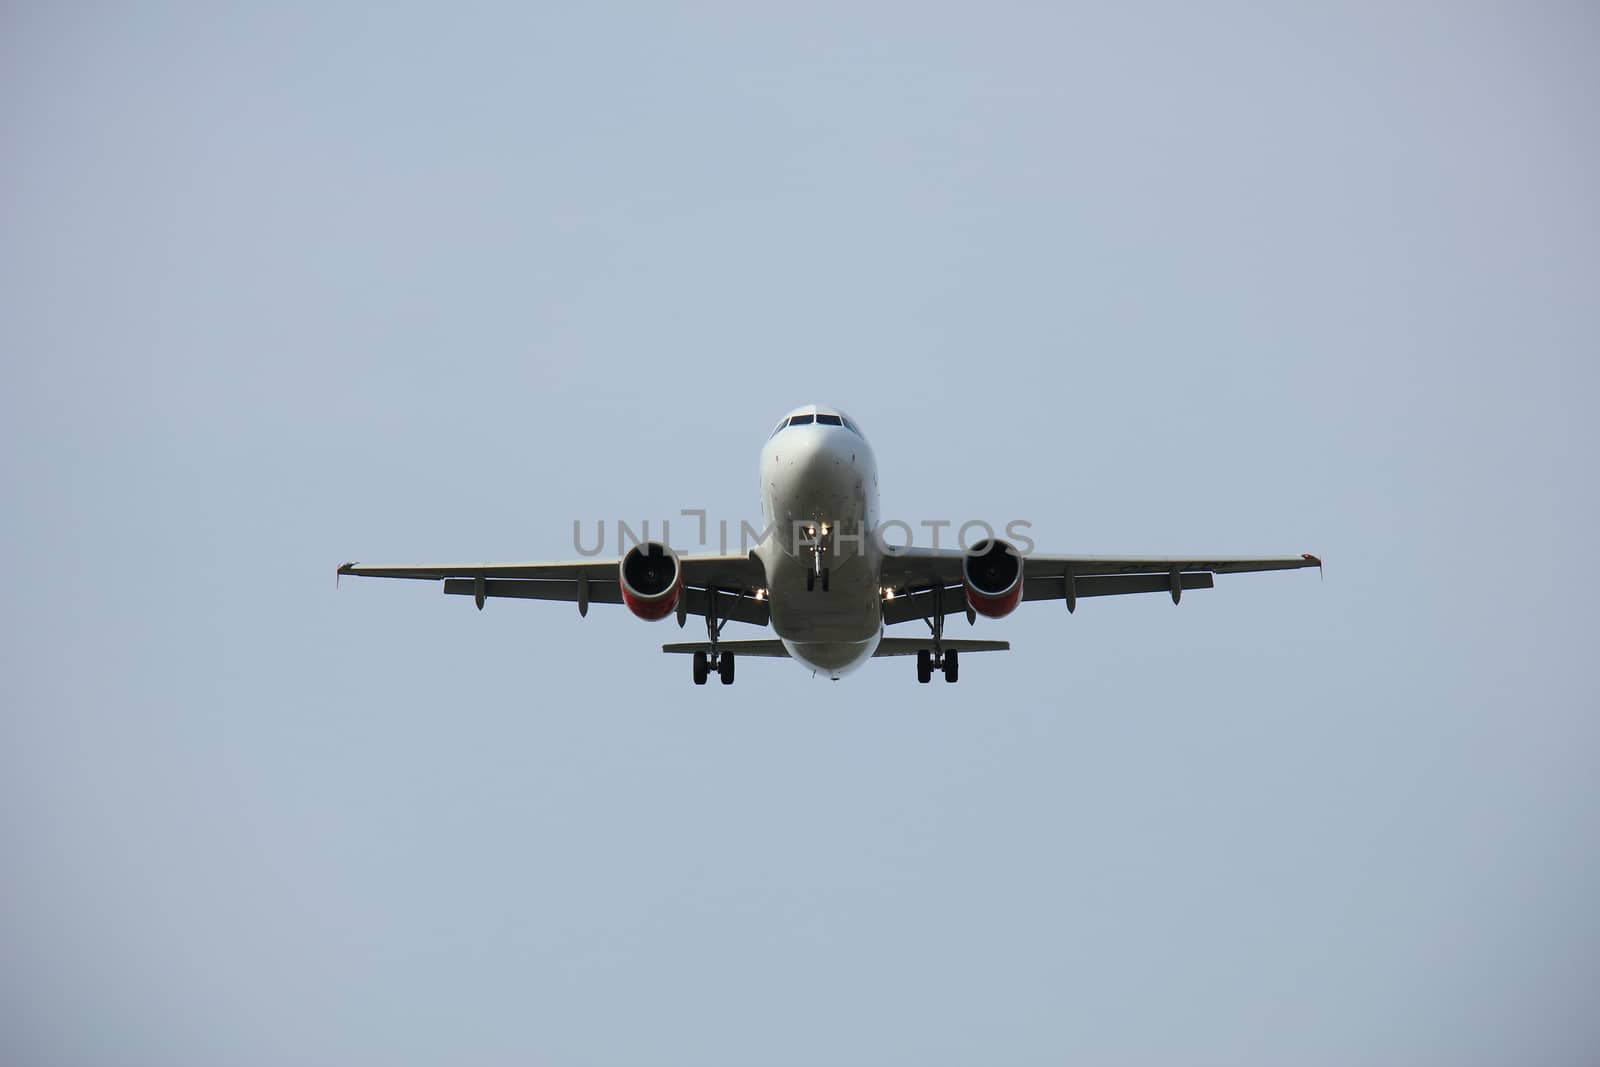 Plane approaching runway by studioportosabbia